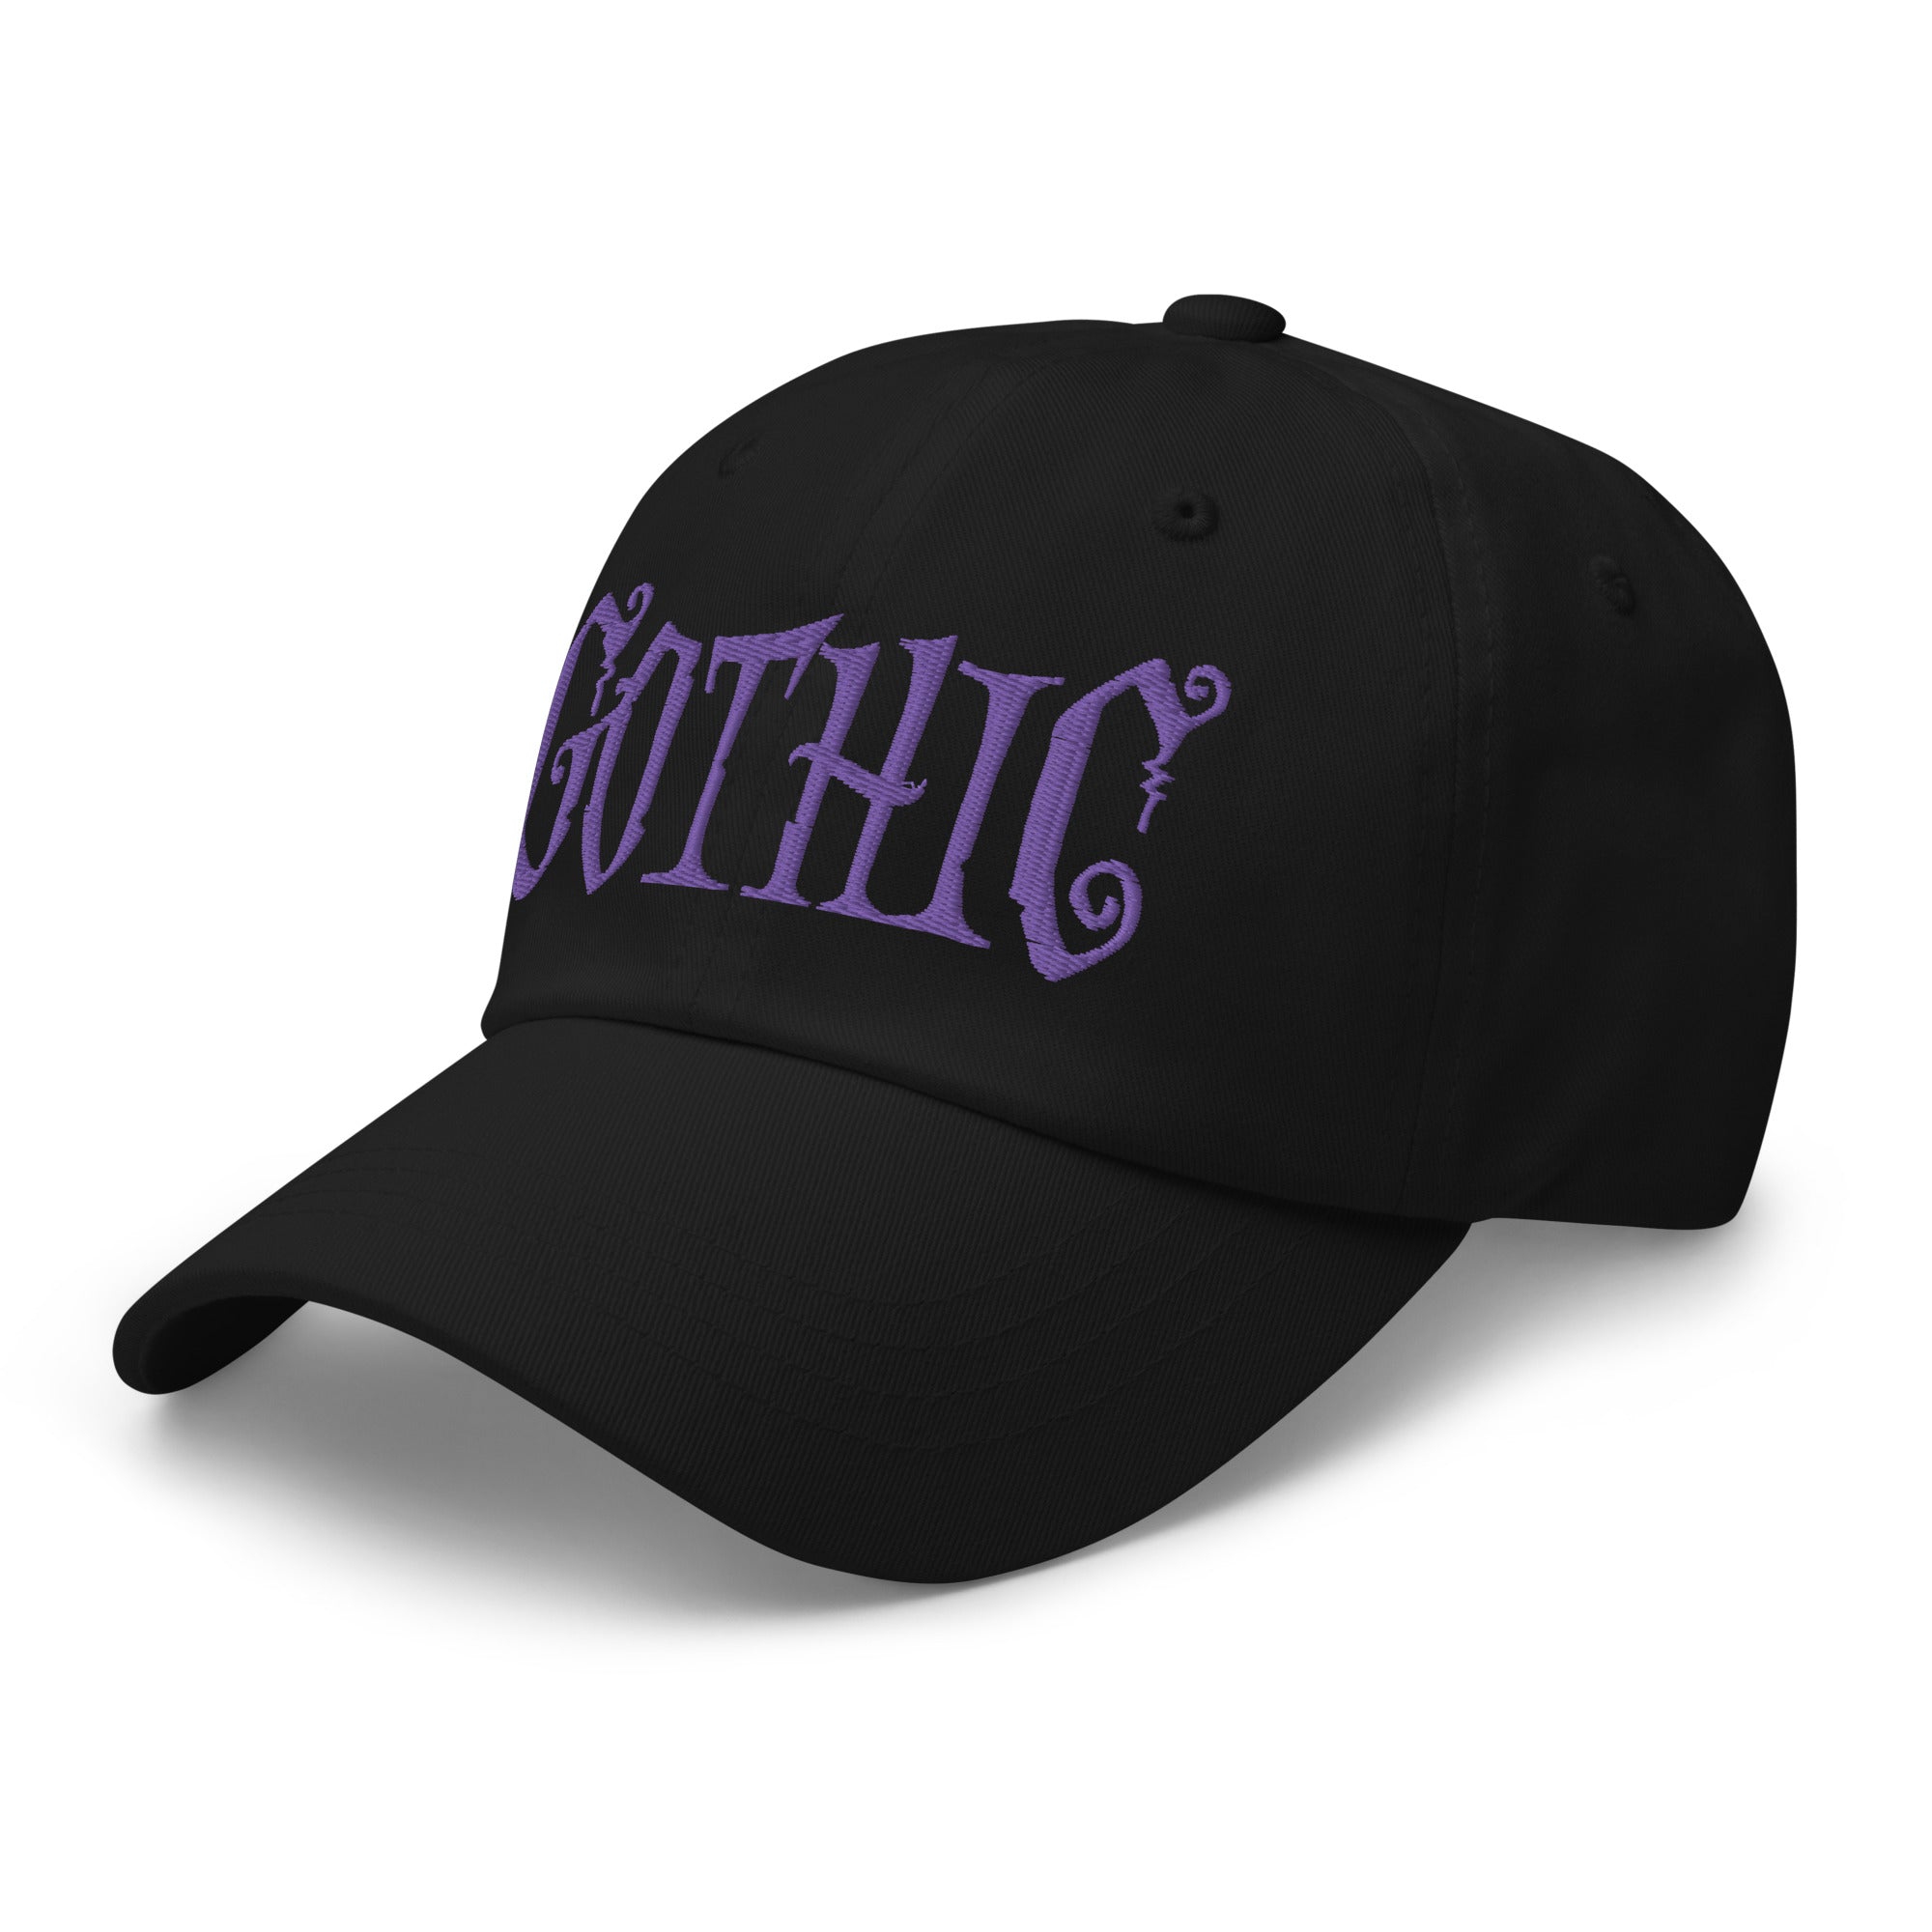 Gothic Dramatic Style Embroidered Baseball Cap Dark Goth Clothing Purple Thread Dad hat - Edge of Life Designs